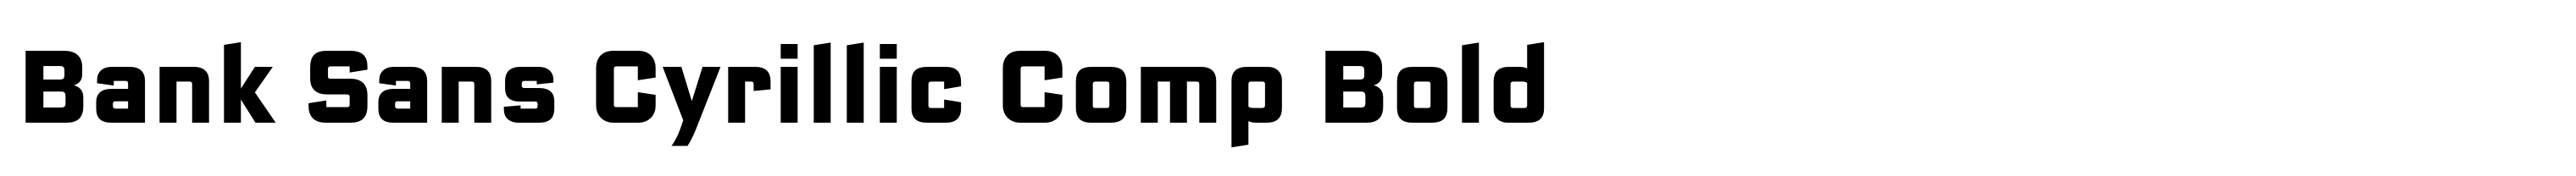 Bank Sans Cyrillic Comp Bold